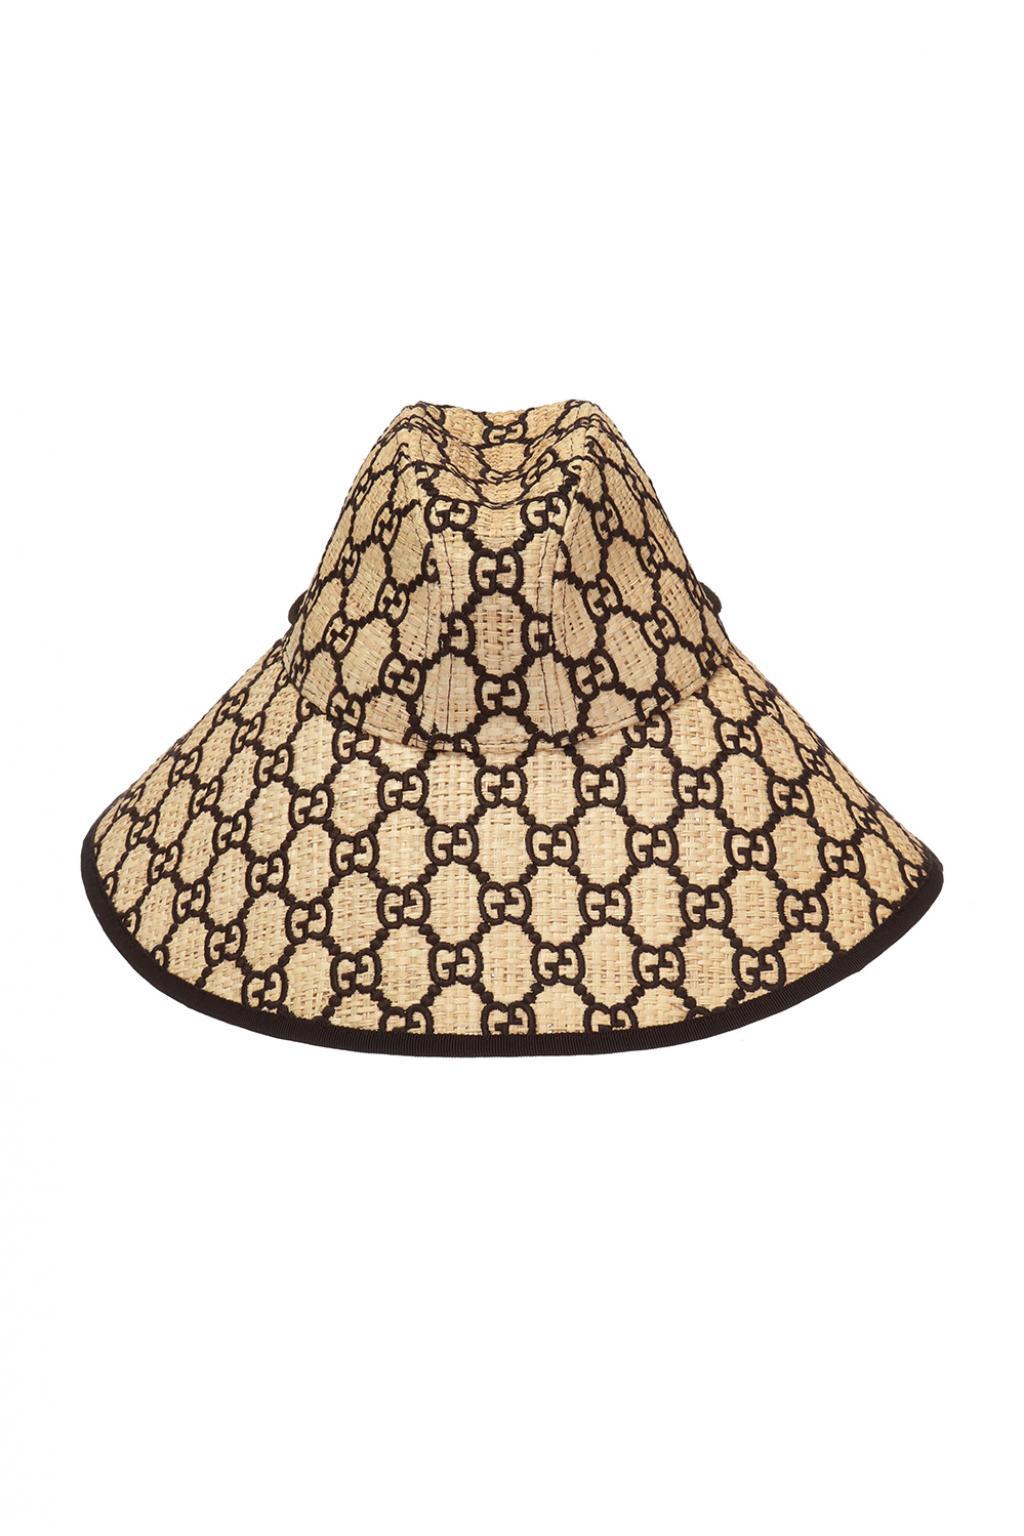 Gucci Cotton GG Raffia Wide Brim Hat in Brown - Lyst